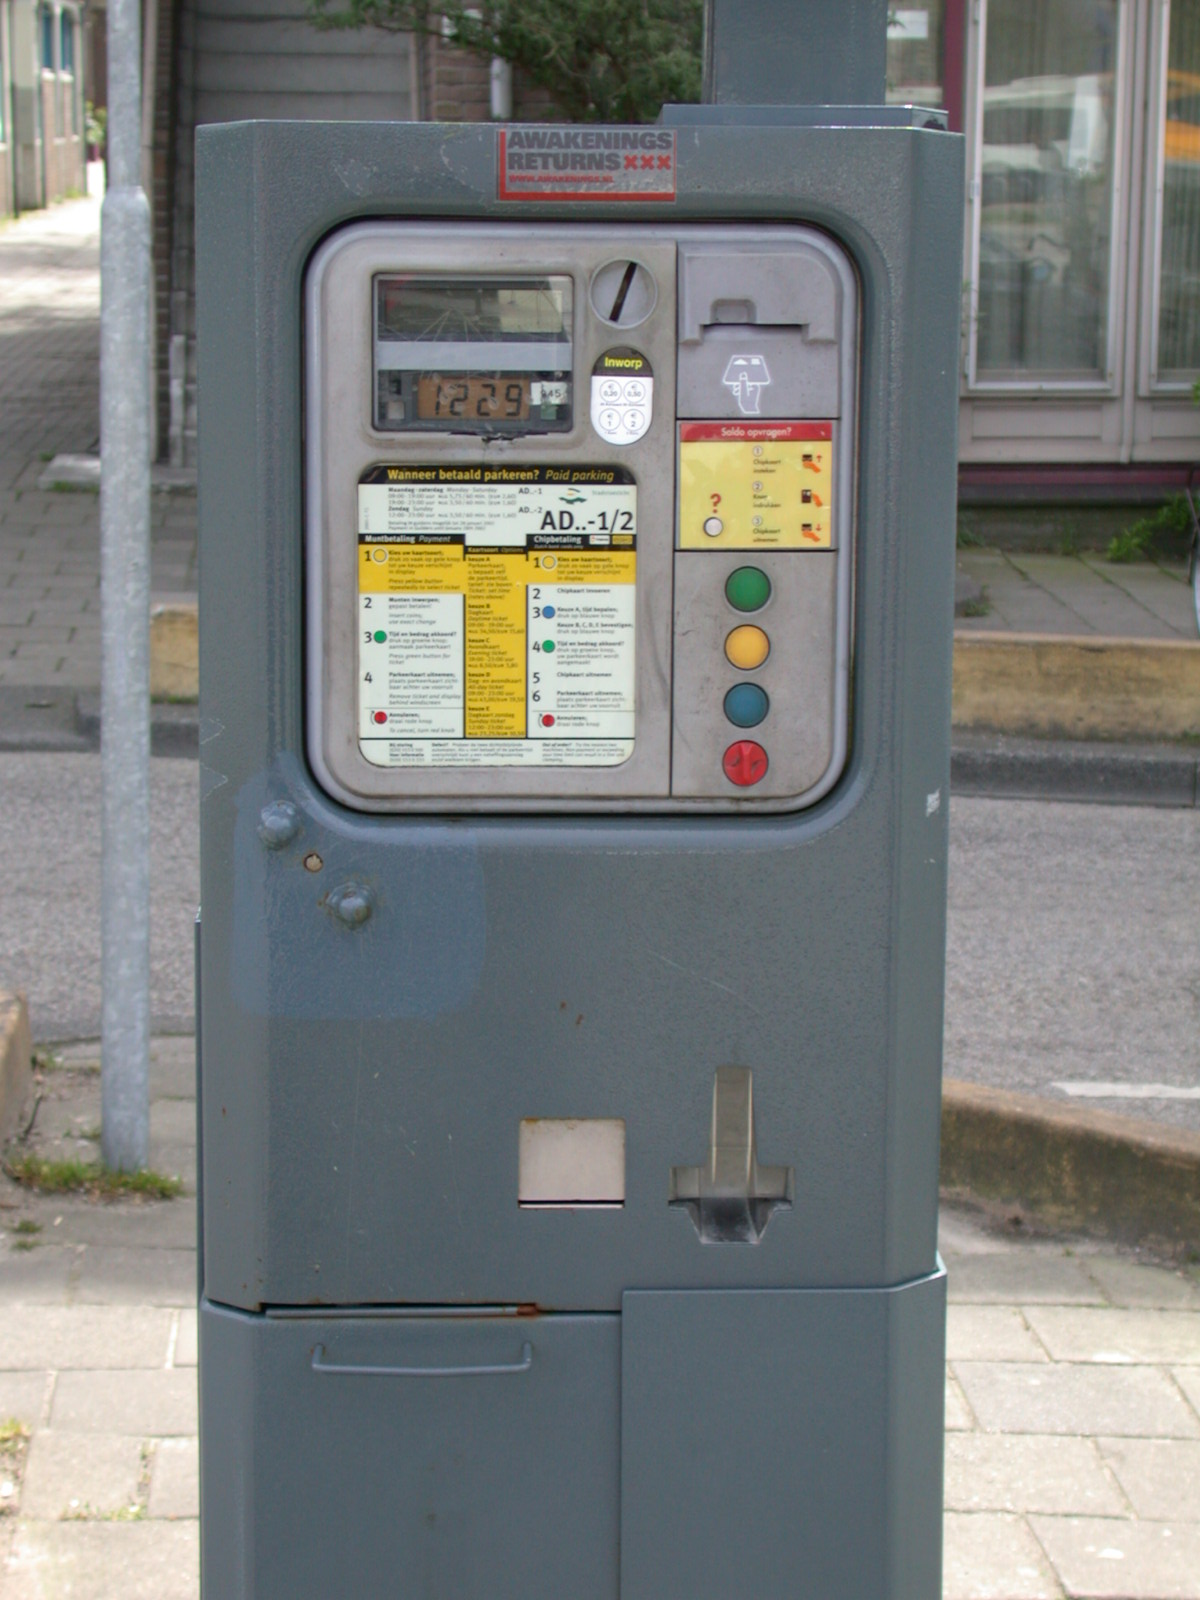 parking meter display numbers slot buttons parkingmeter box